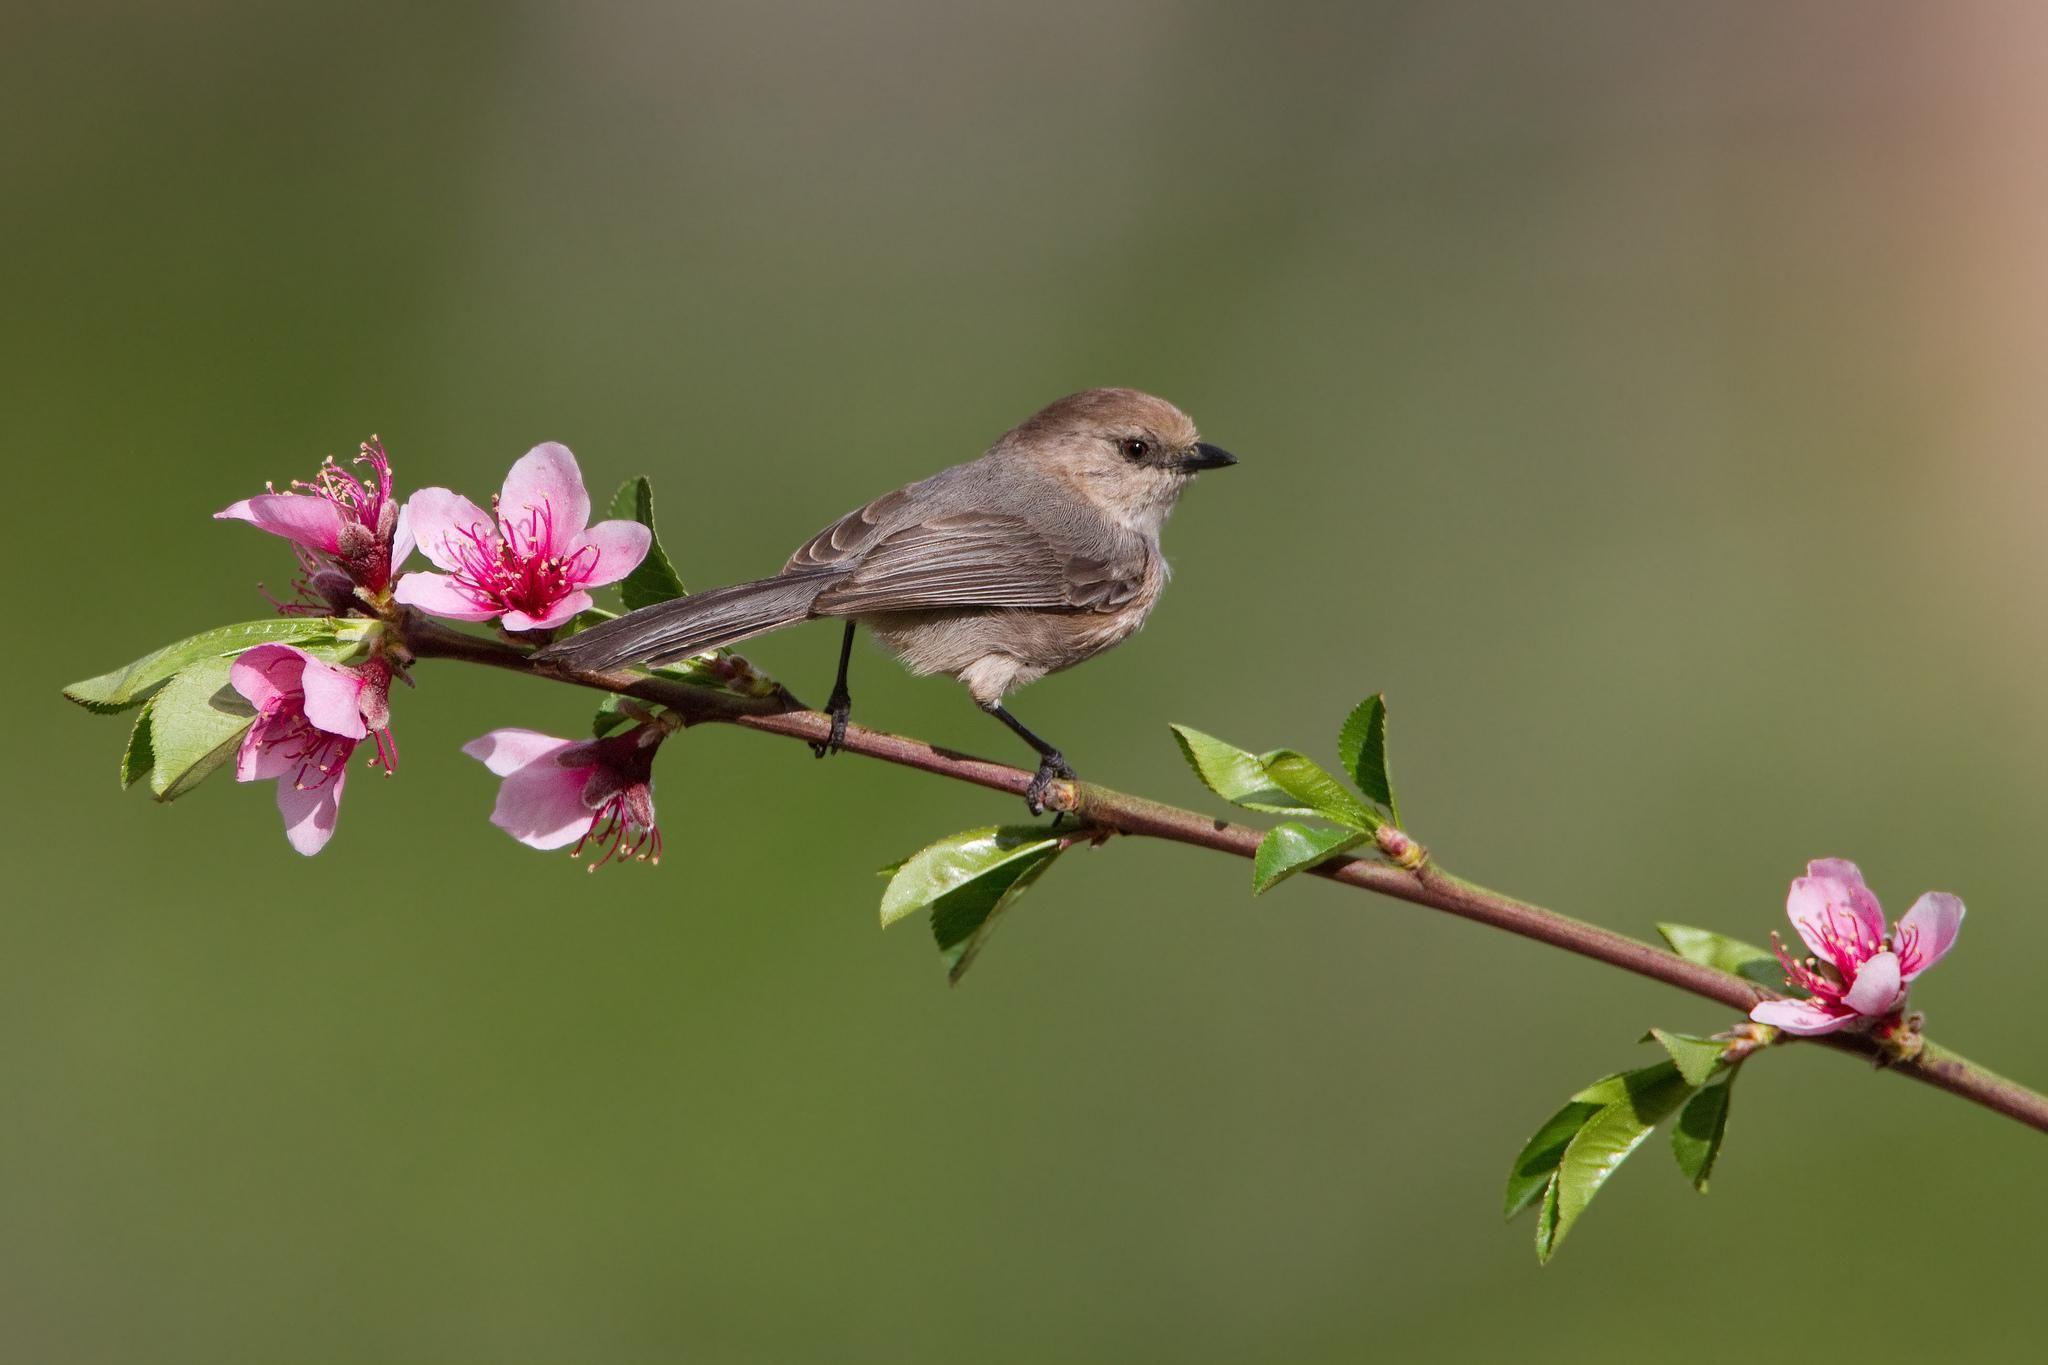 birds on flower branches. HD *** Bird on a flowering tree branch